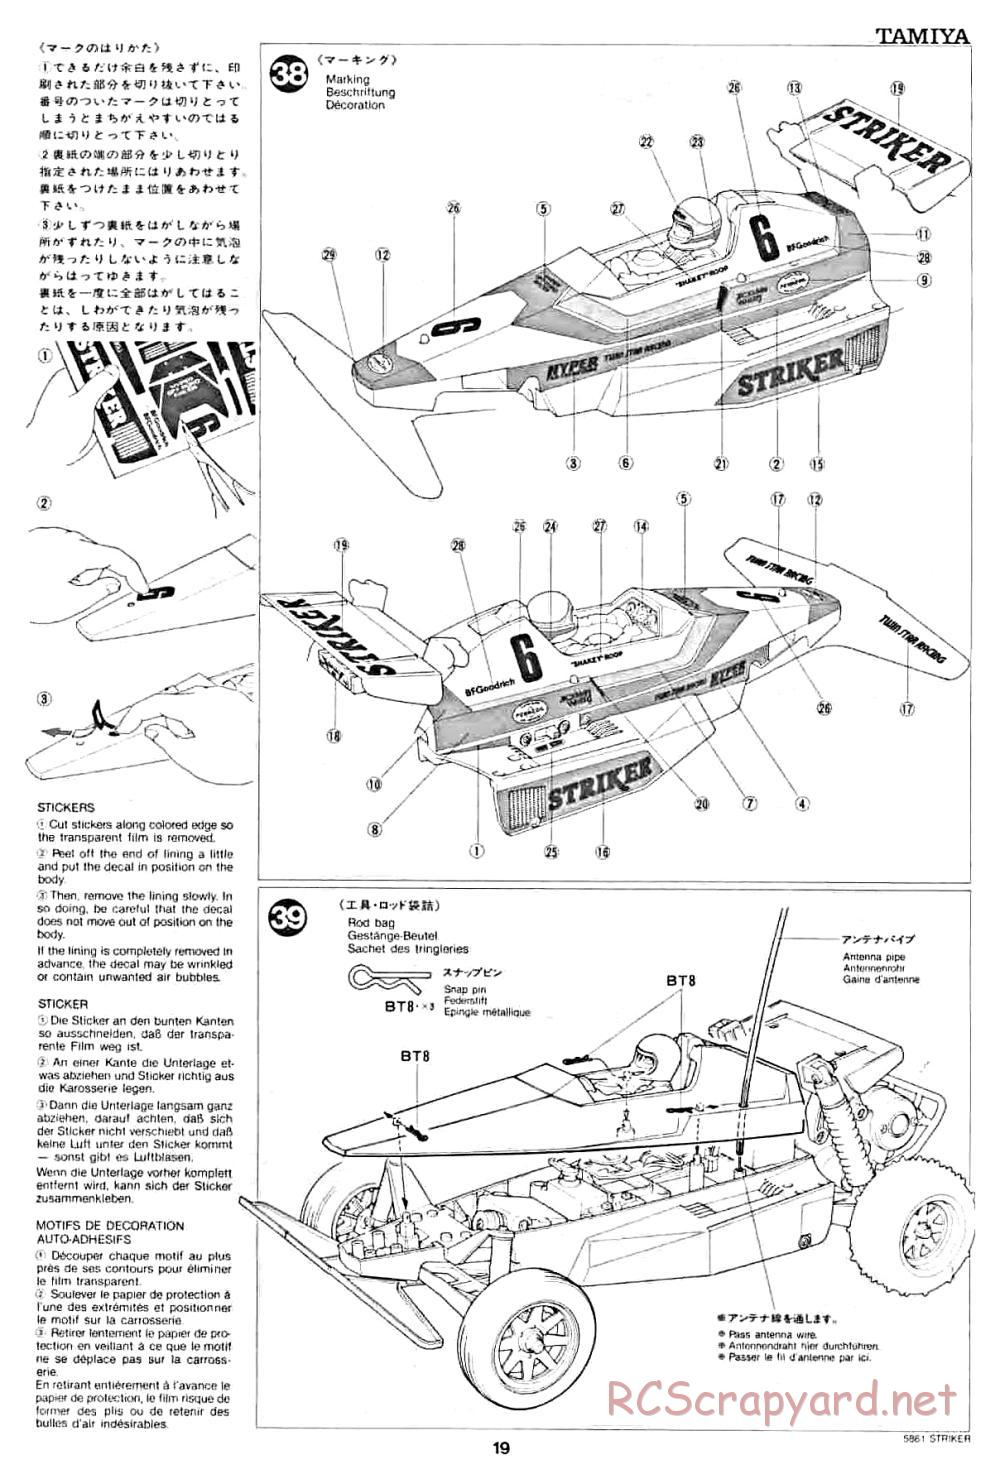 Tamiya - Striker - 58061 - Manual - Page 19